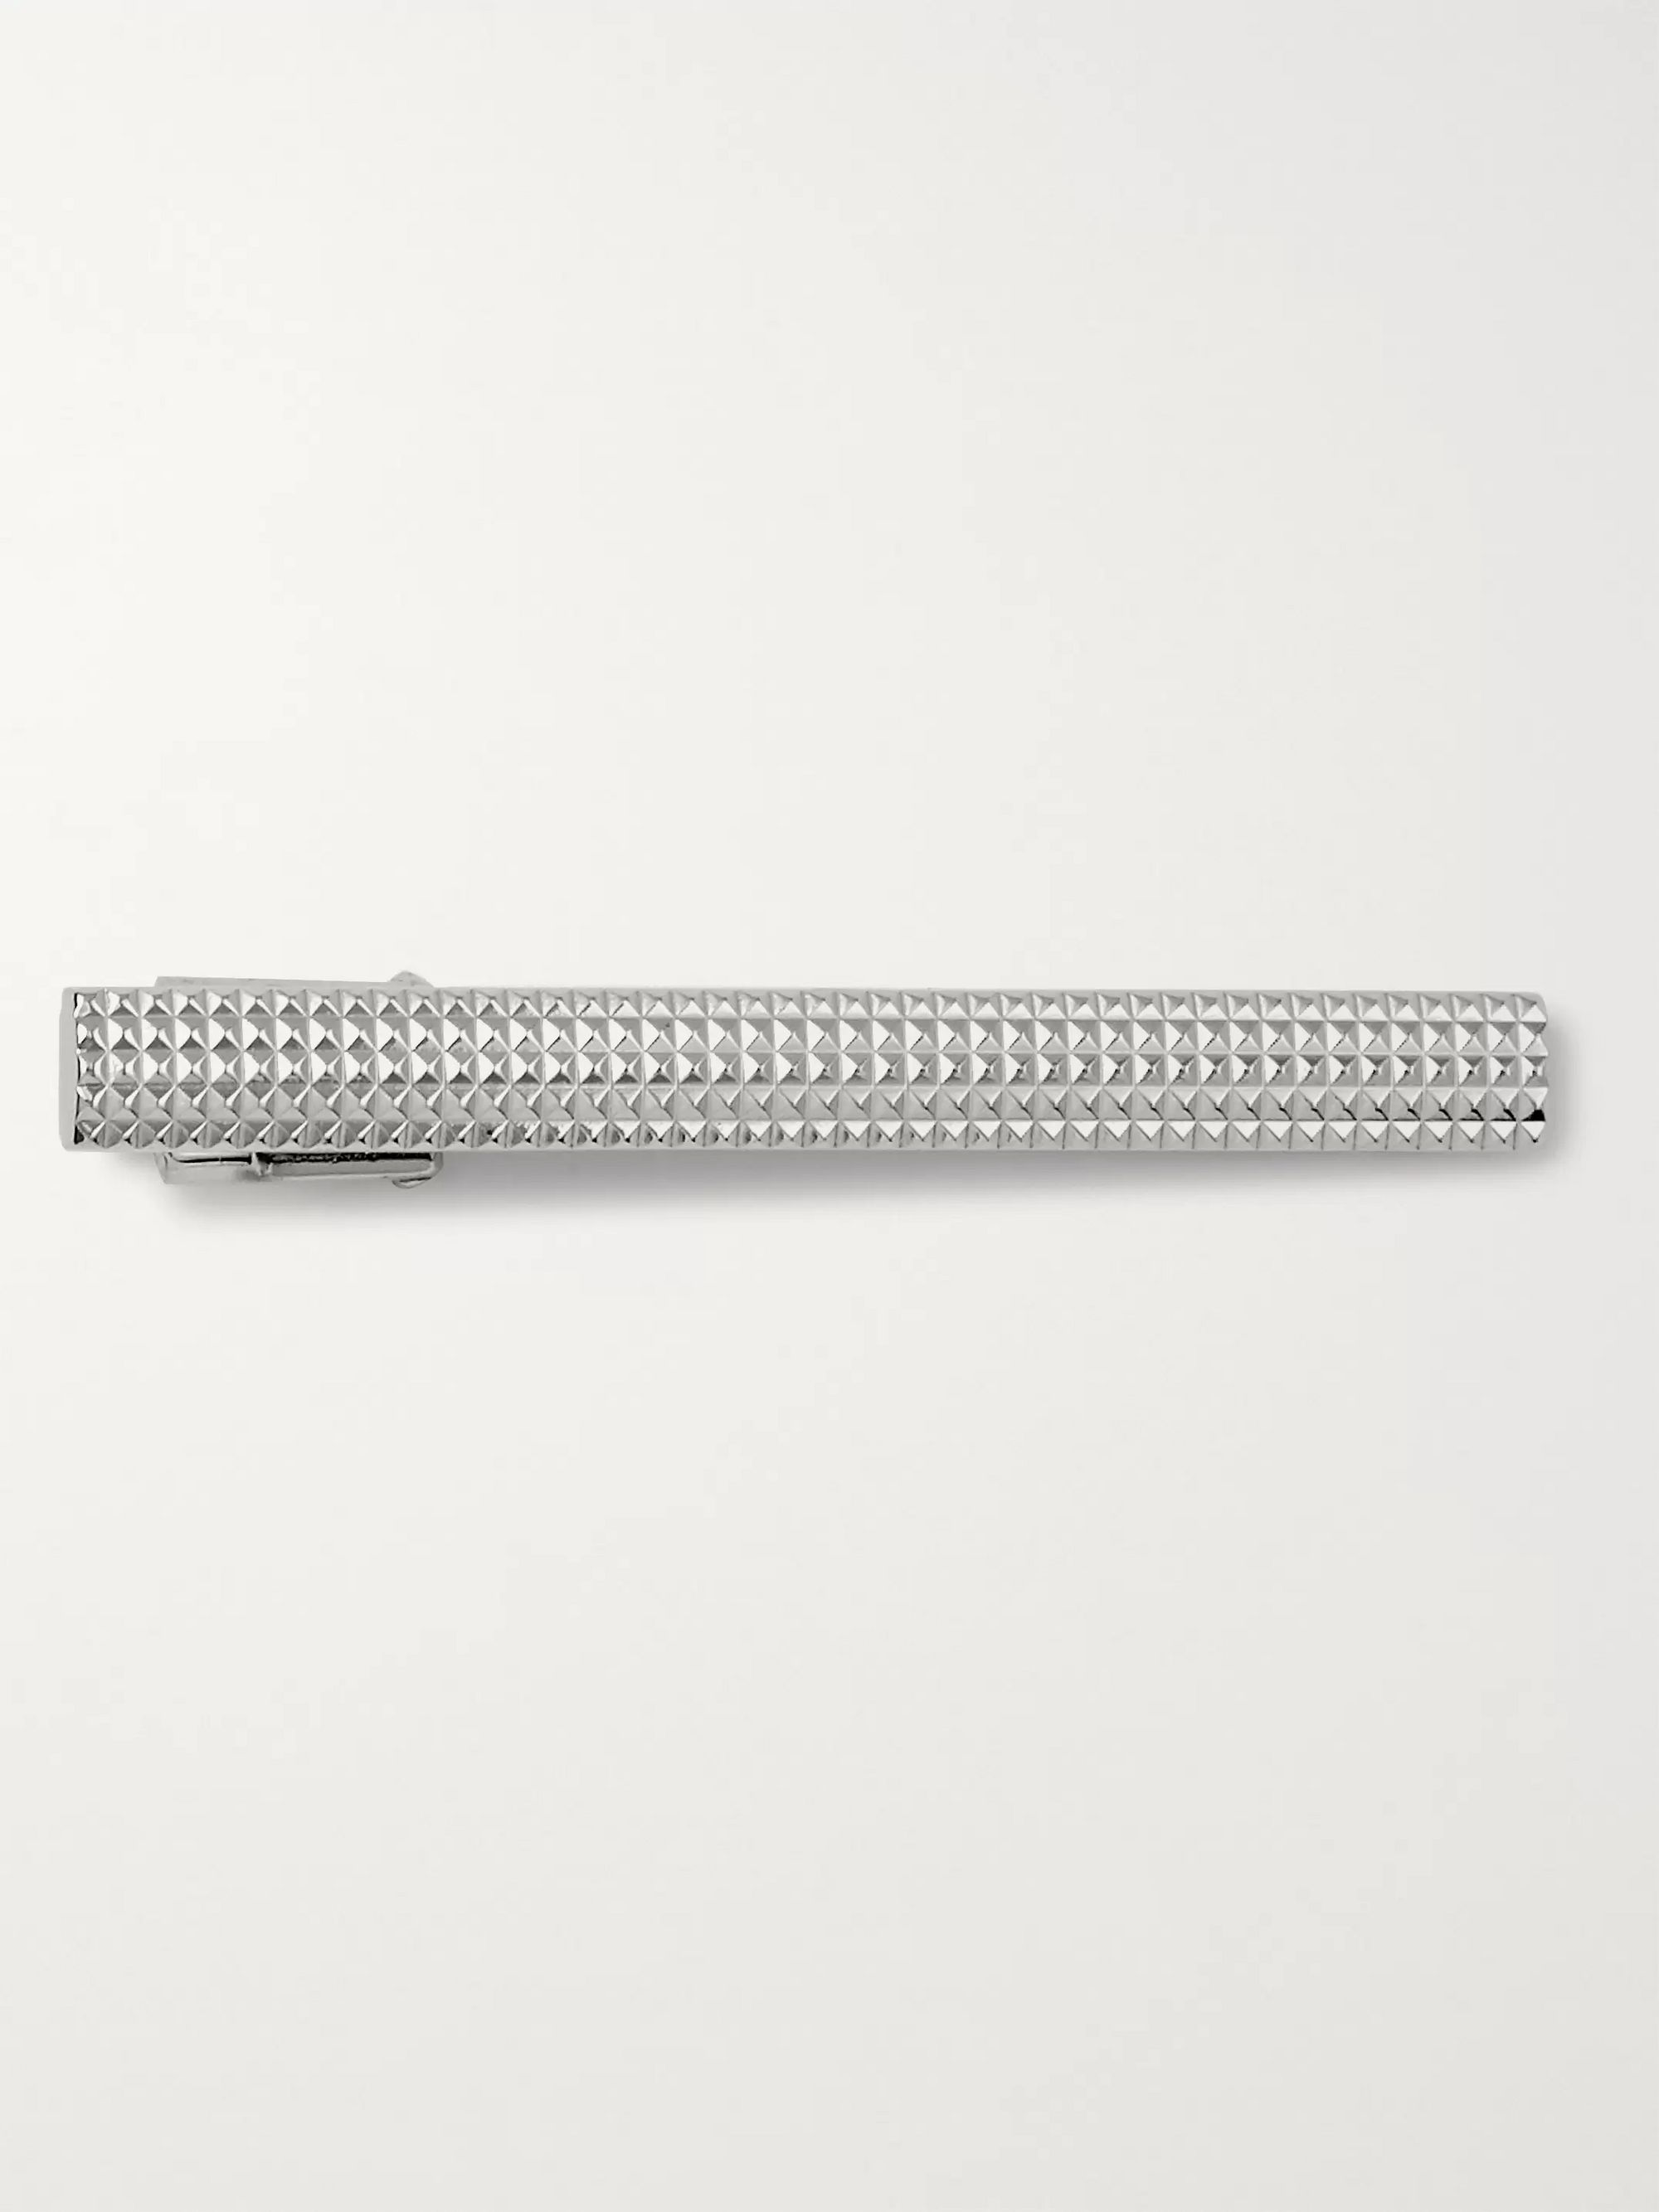 Silver Rhodium-Plated Tie Bar | Lanvin | MR PORTER